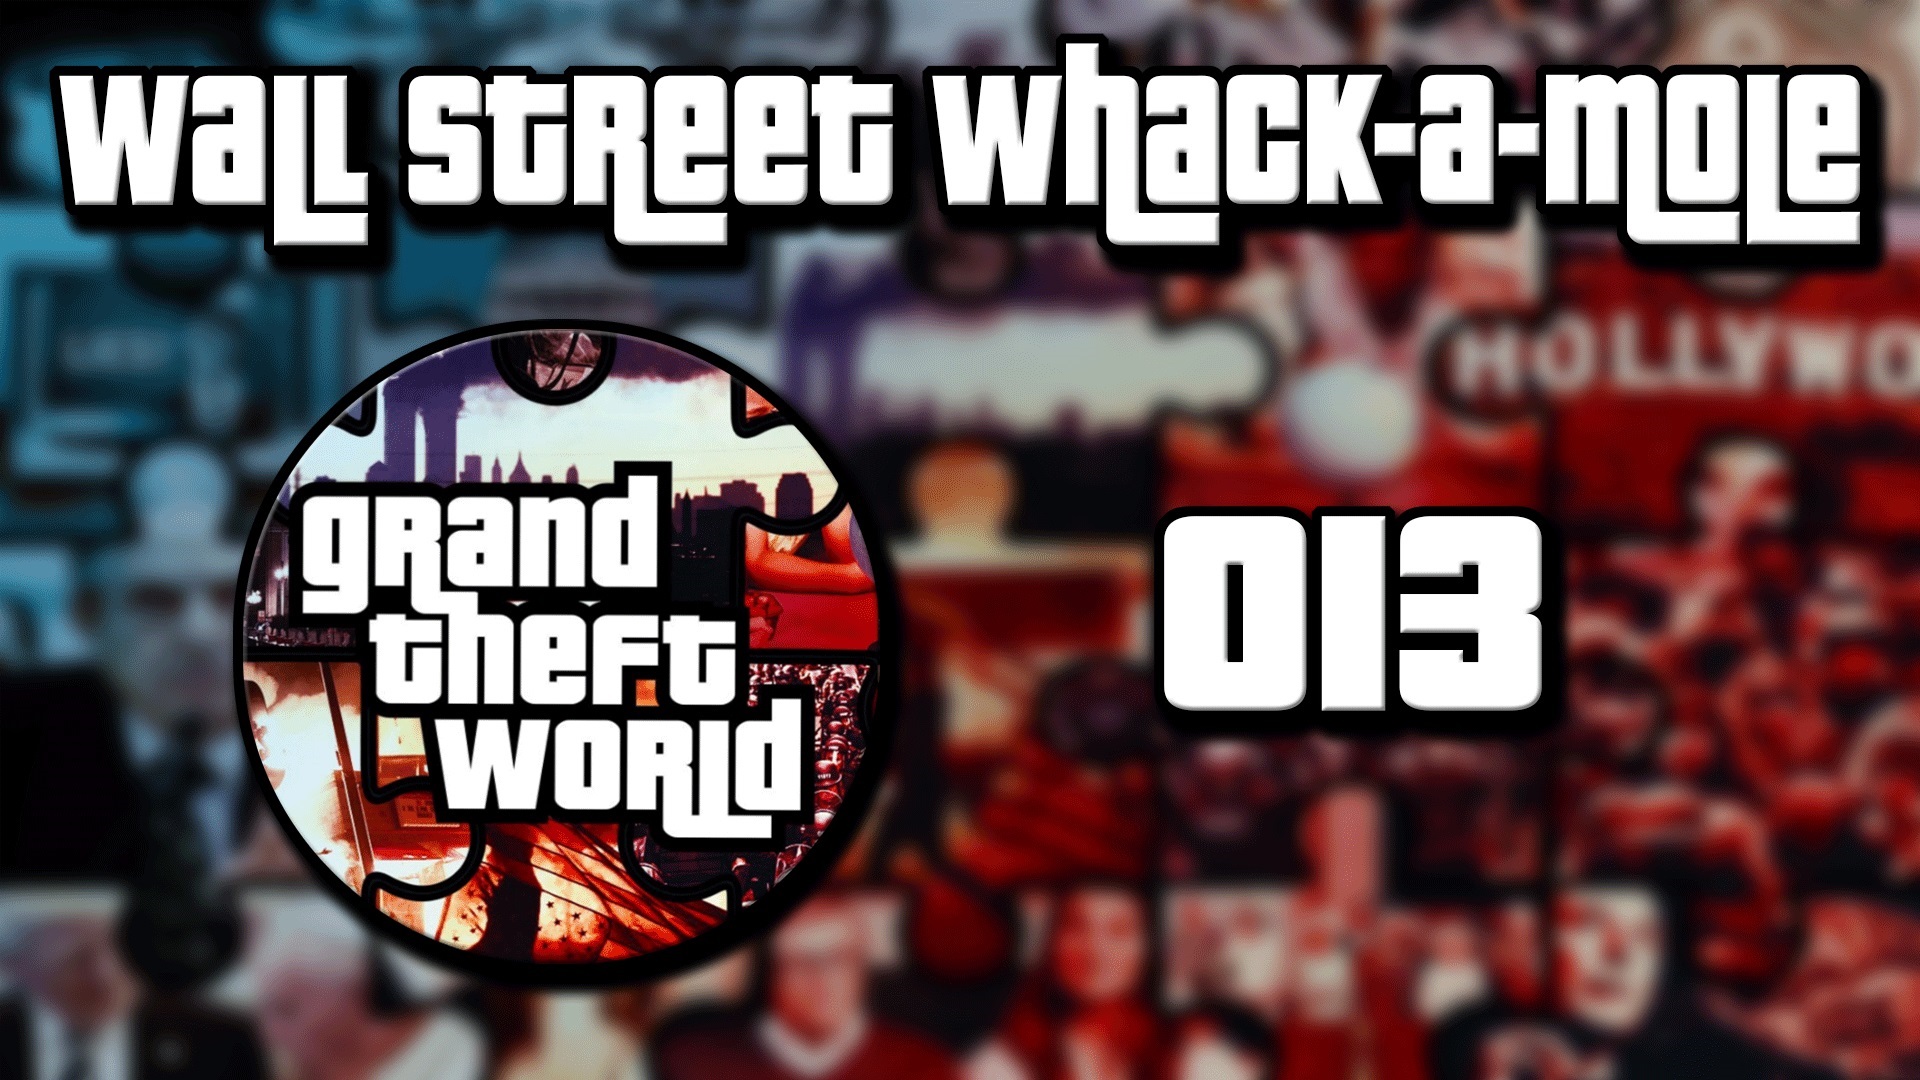 Grand Theft World Podcast 013 | Wall Street Whack-A-Mole